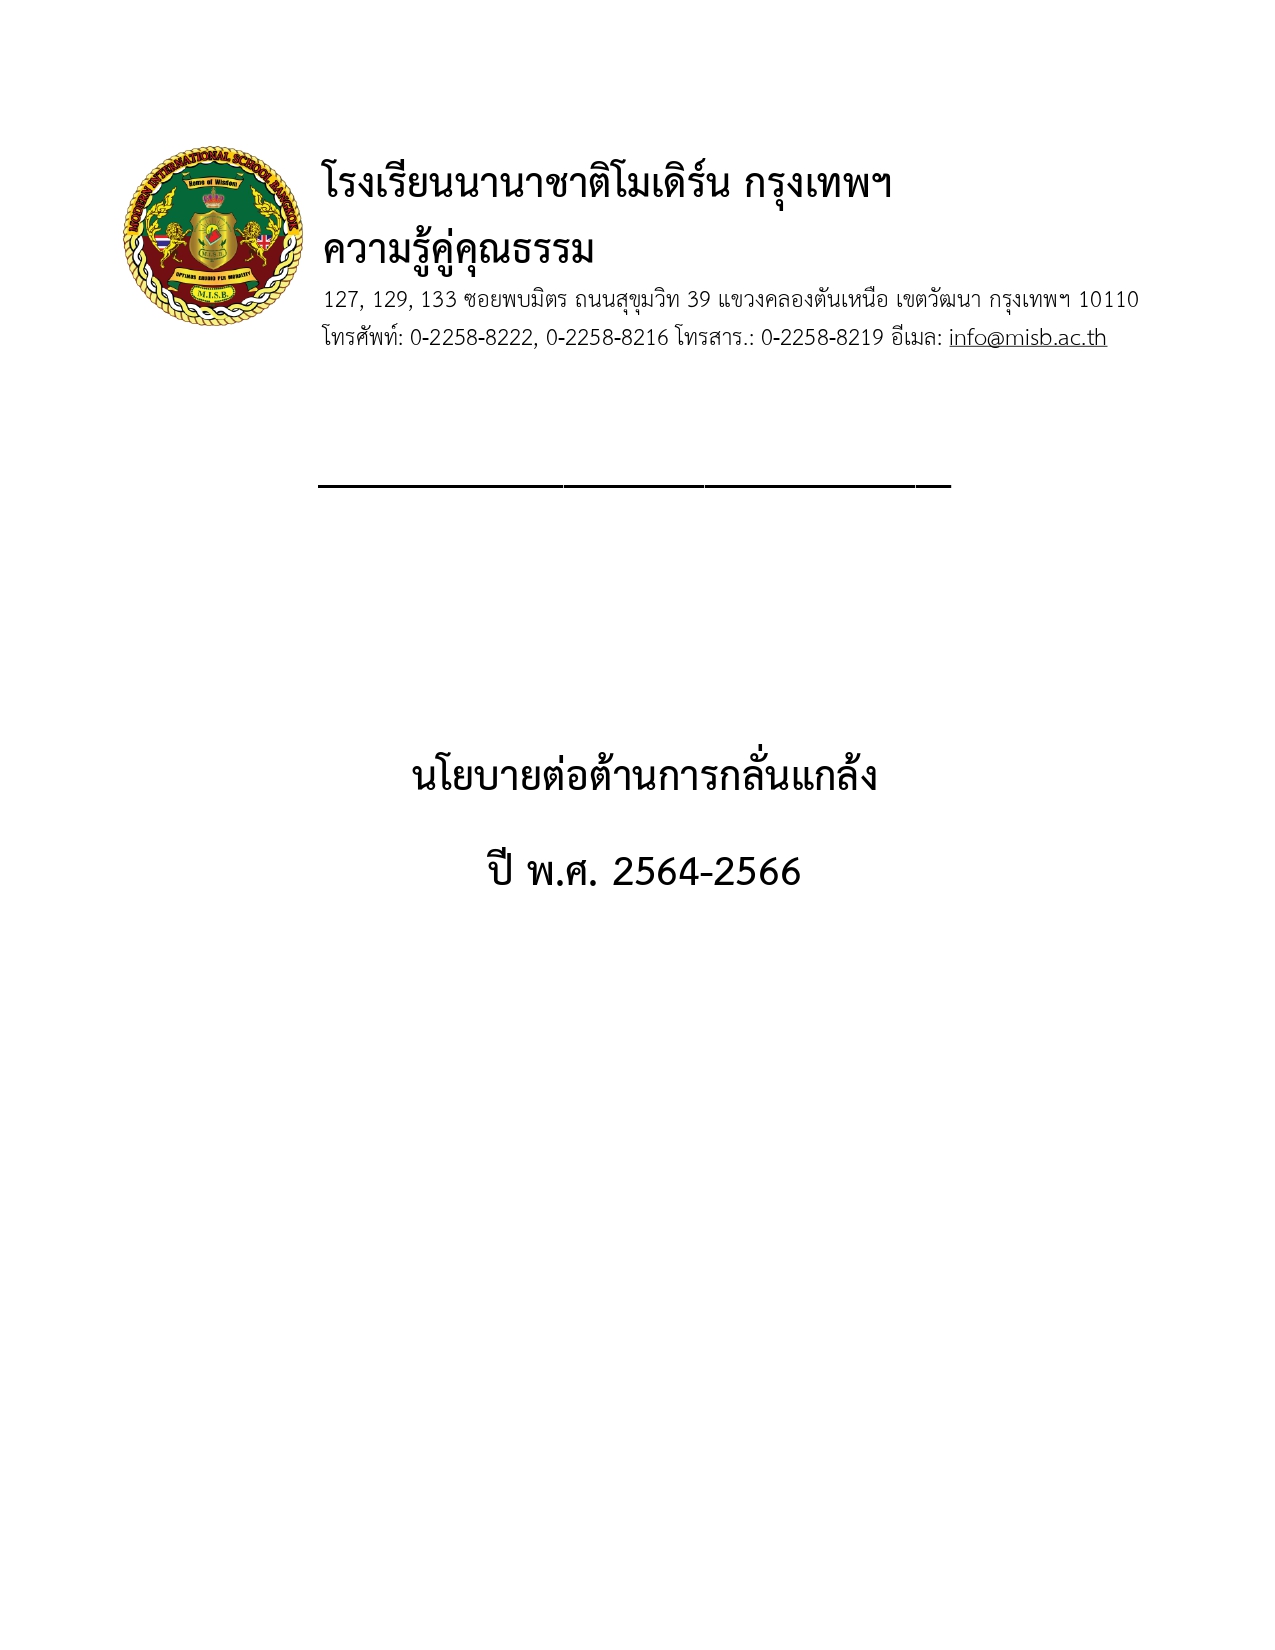 Anti Bullying Policy 2021 2023 Thai Language page 0001